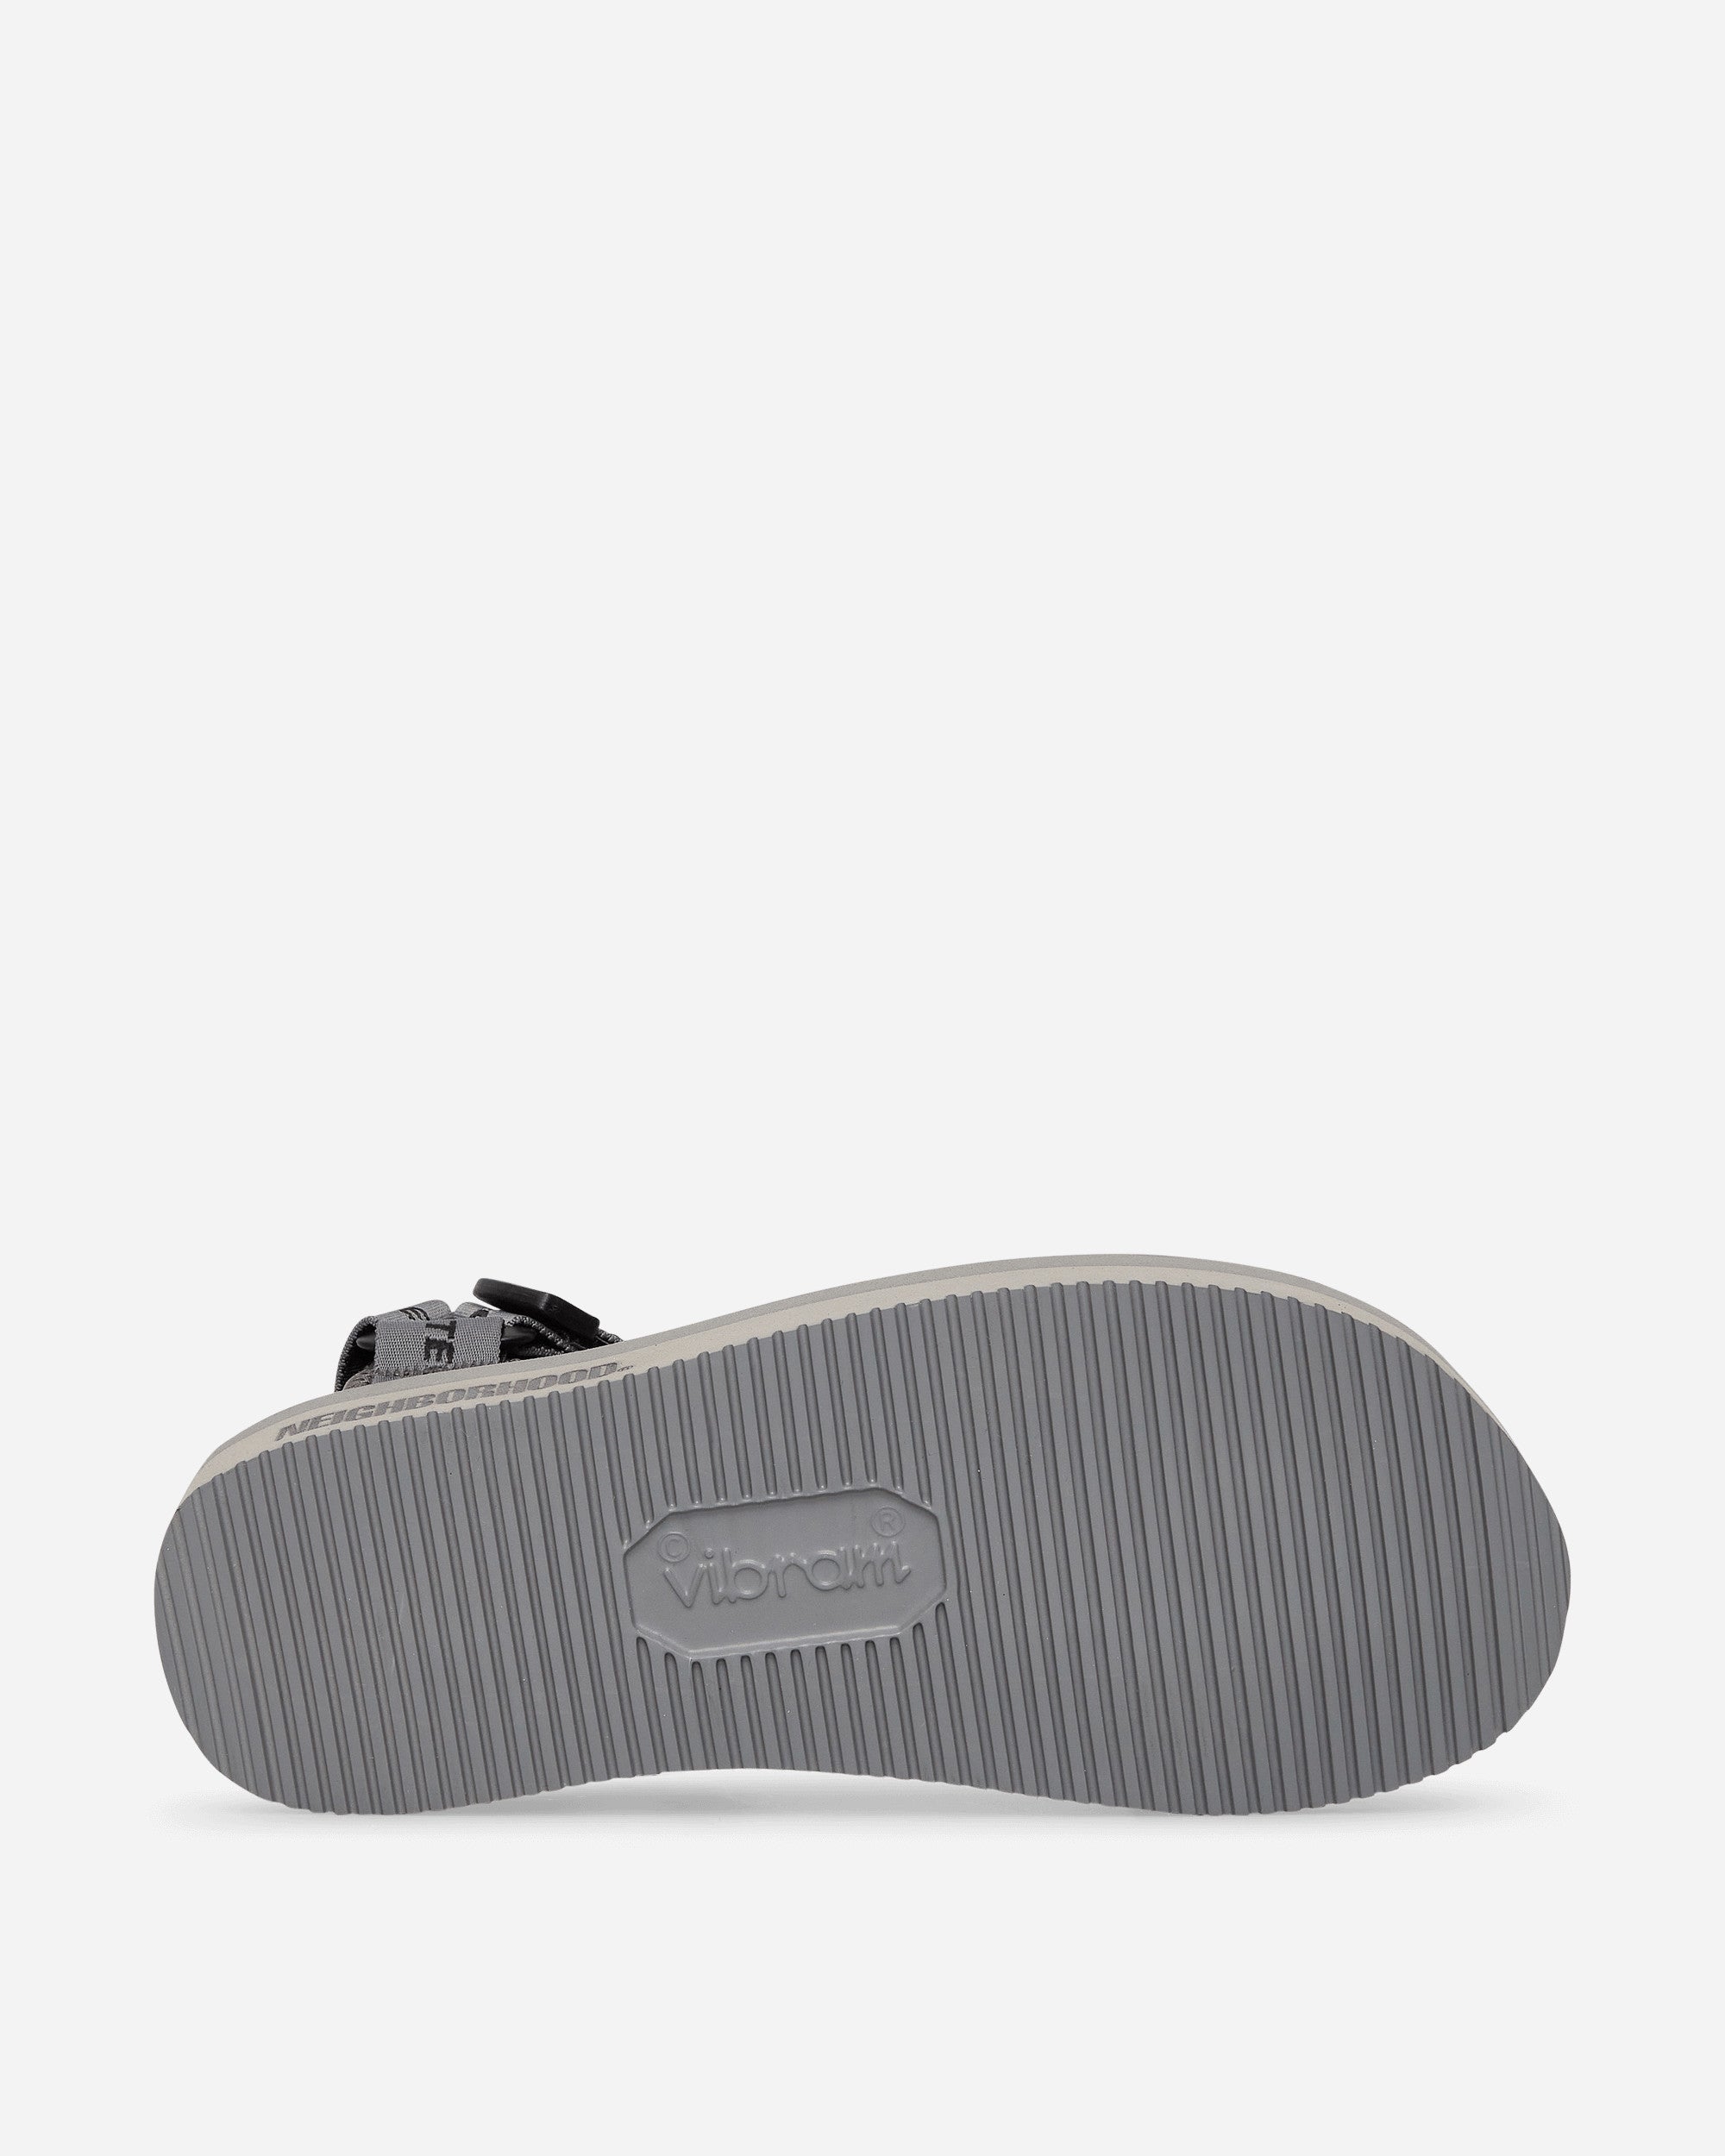 Suicoke Depa-V2NH Gray Sandals Sandal OG-022V2NH GRY